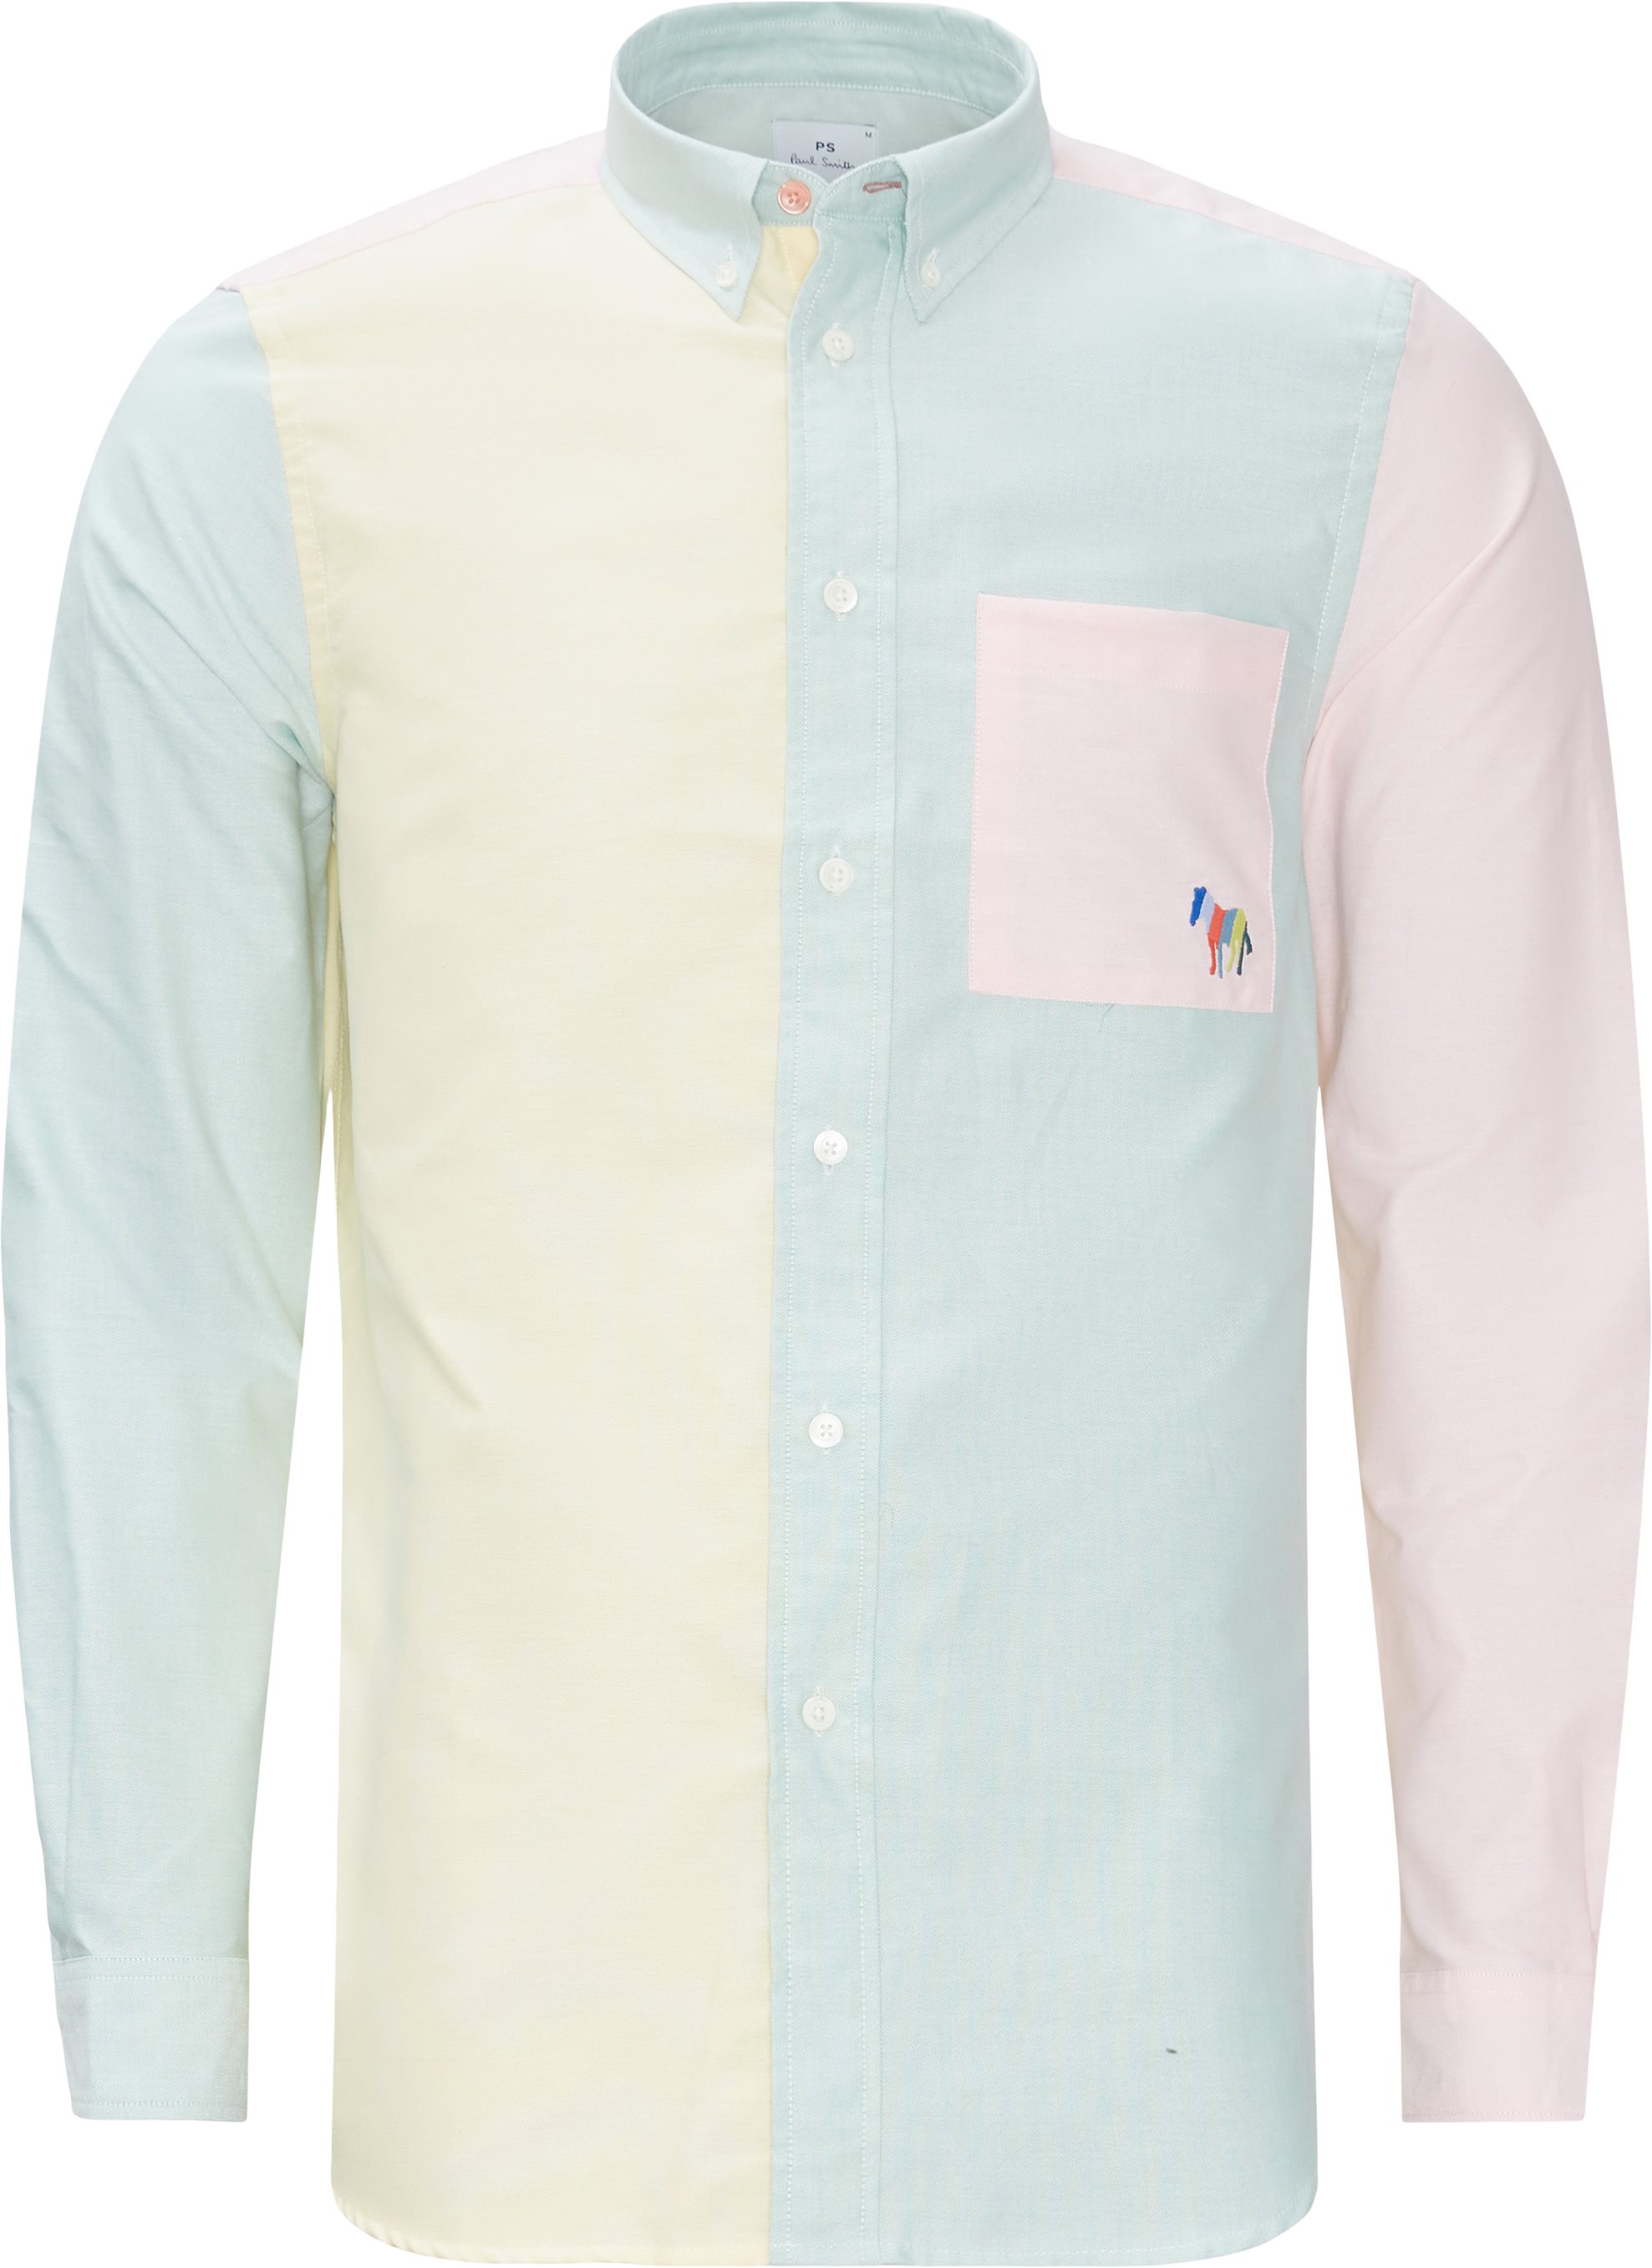 Multi Colored Shirt - Skjorter - Regular fit - Multi